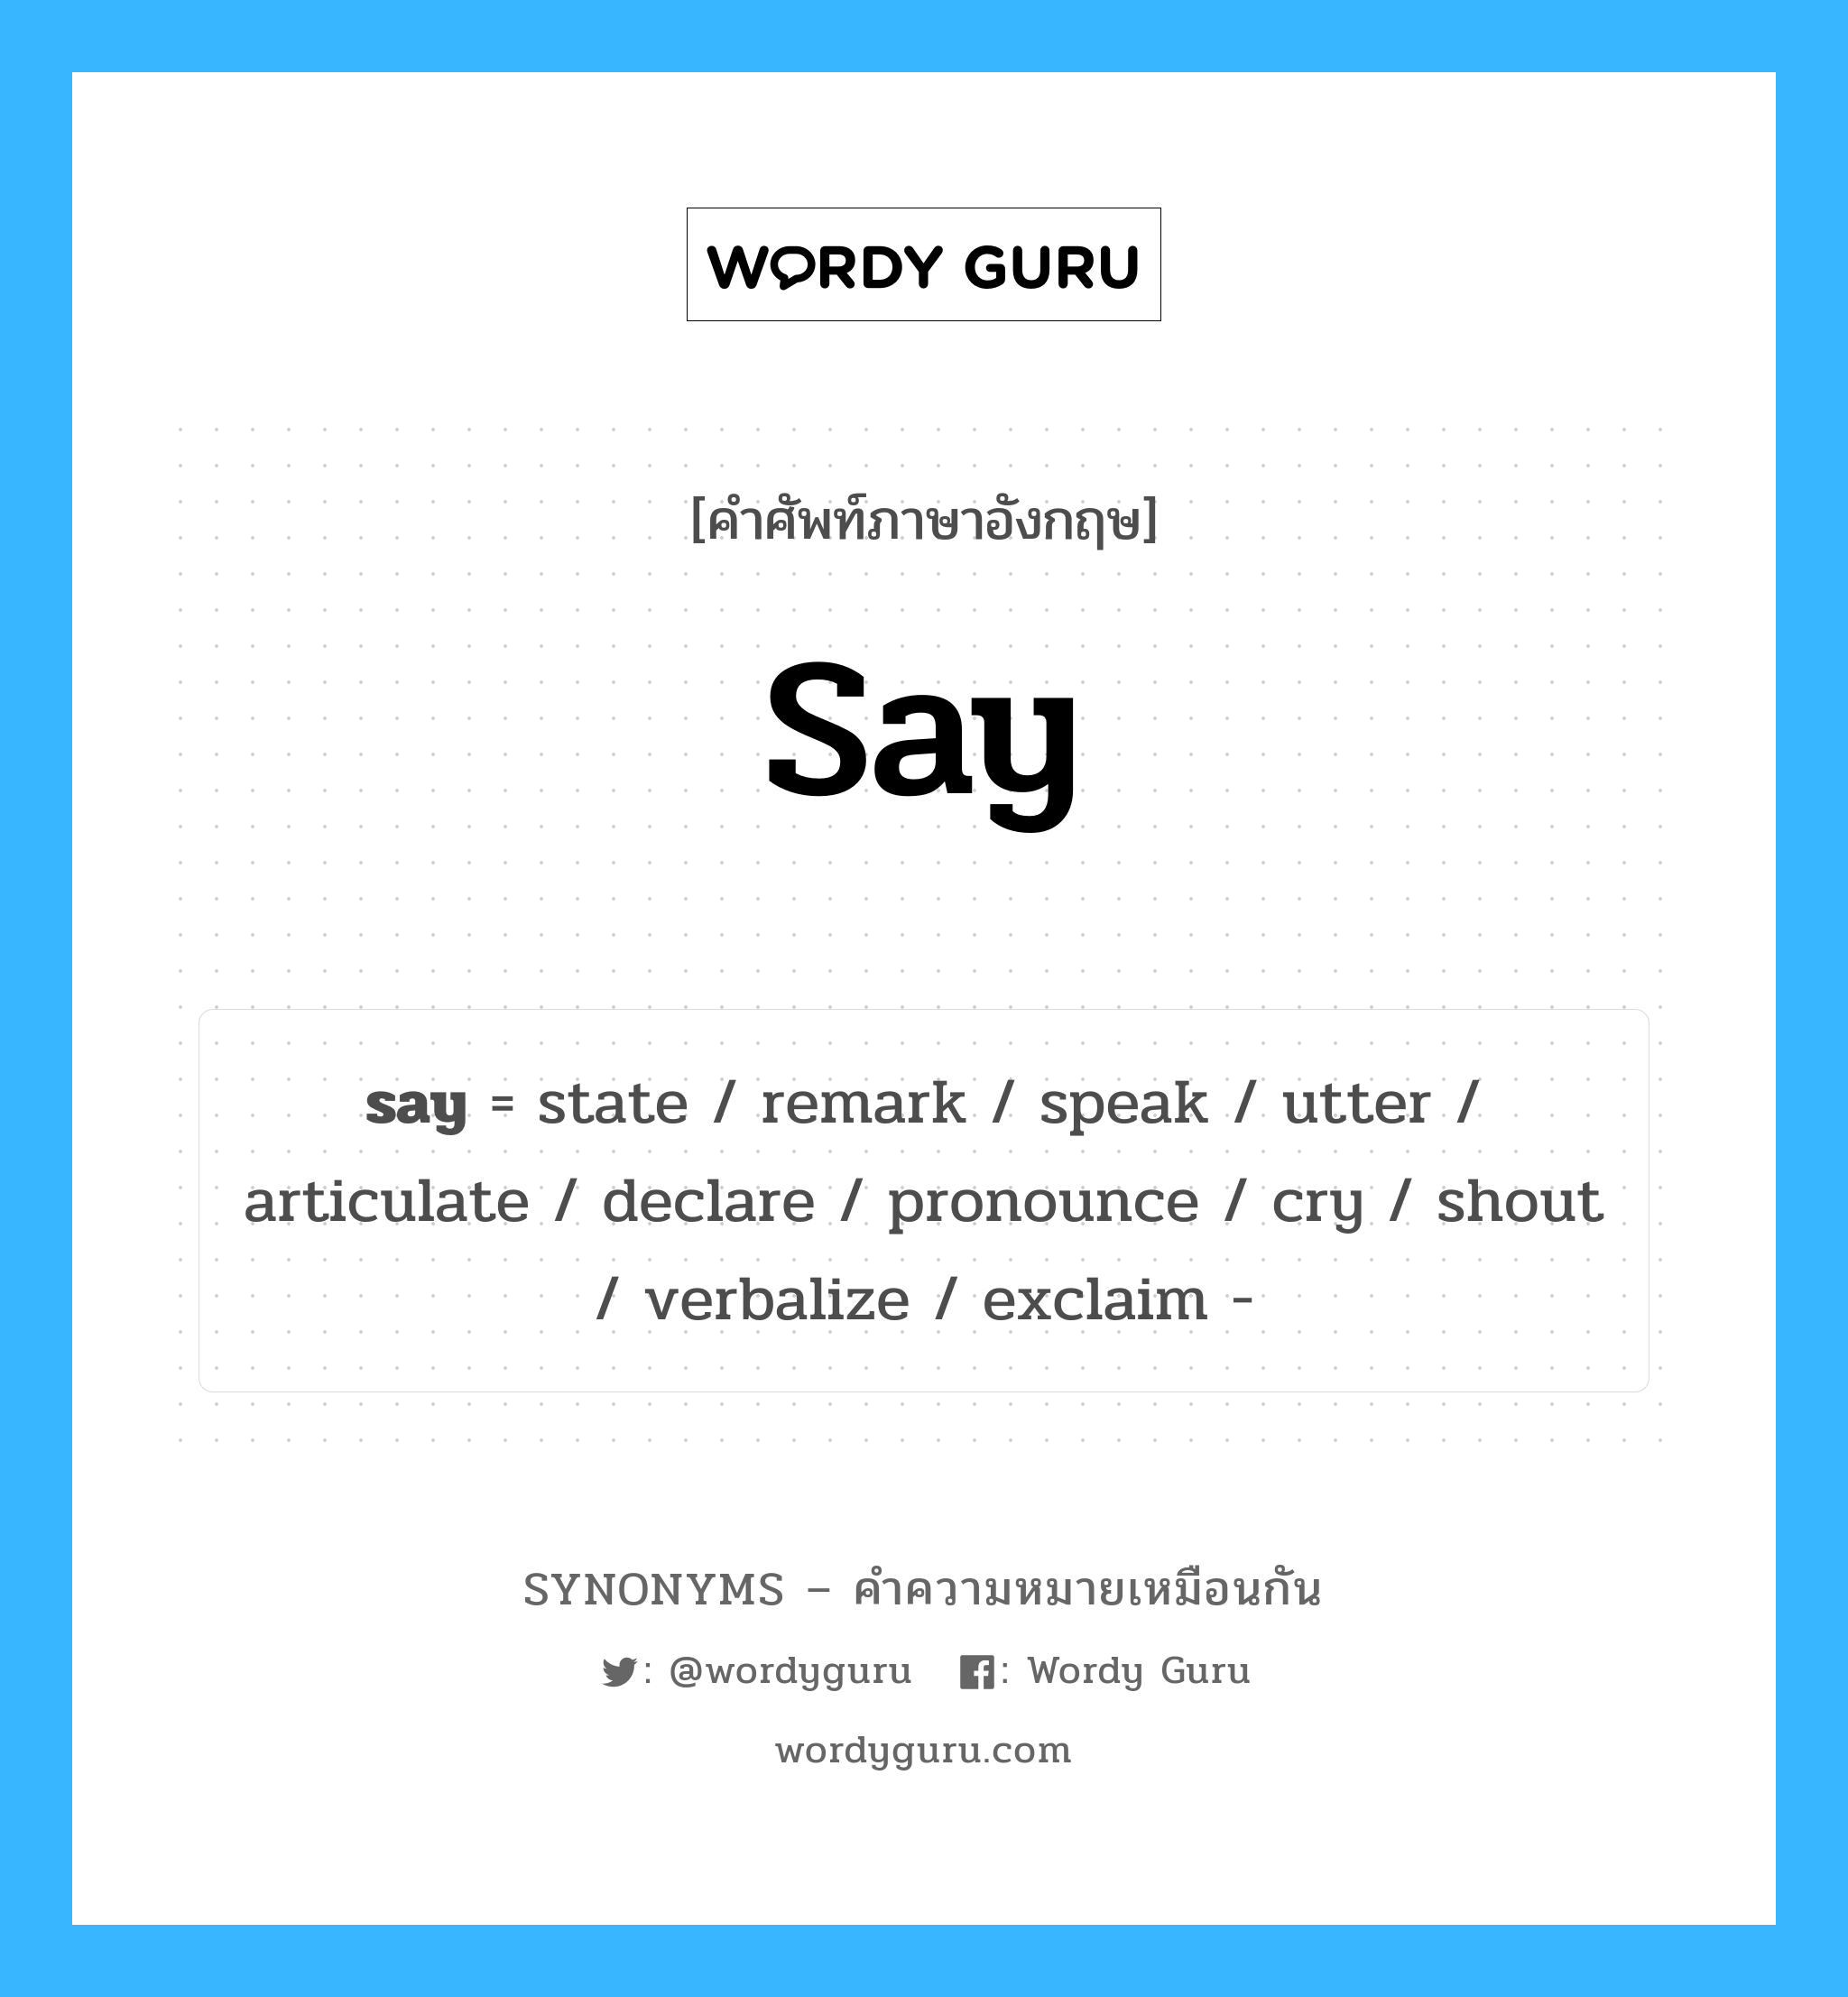 pronounce เป็นหนึ่งใน say และมีคำอื่น ๆ อีกดังนี้, คำศัพท์ภาษาอังกฤษ pronounce ความหมายคล้ายกันกับ say แปลว่า ออกเสียง หมวด say